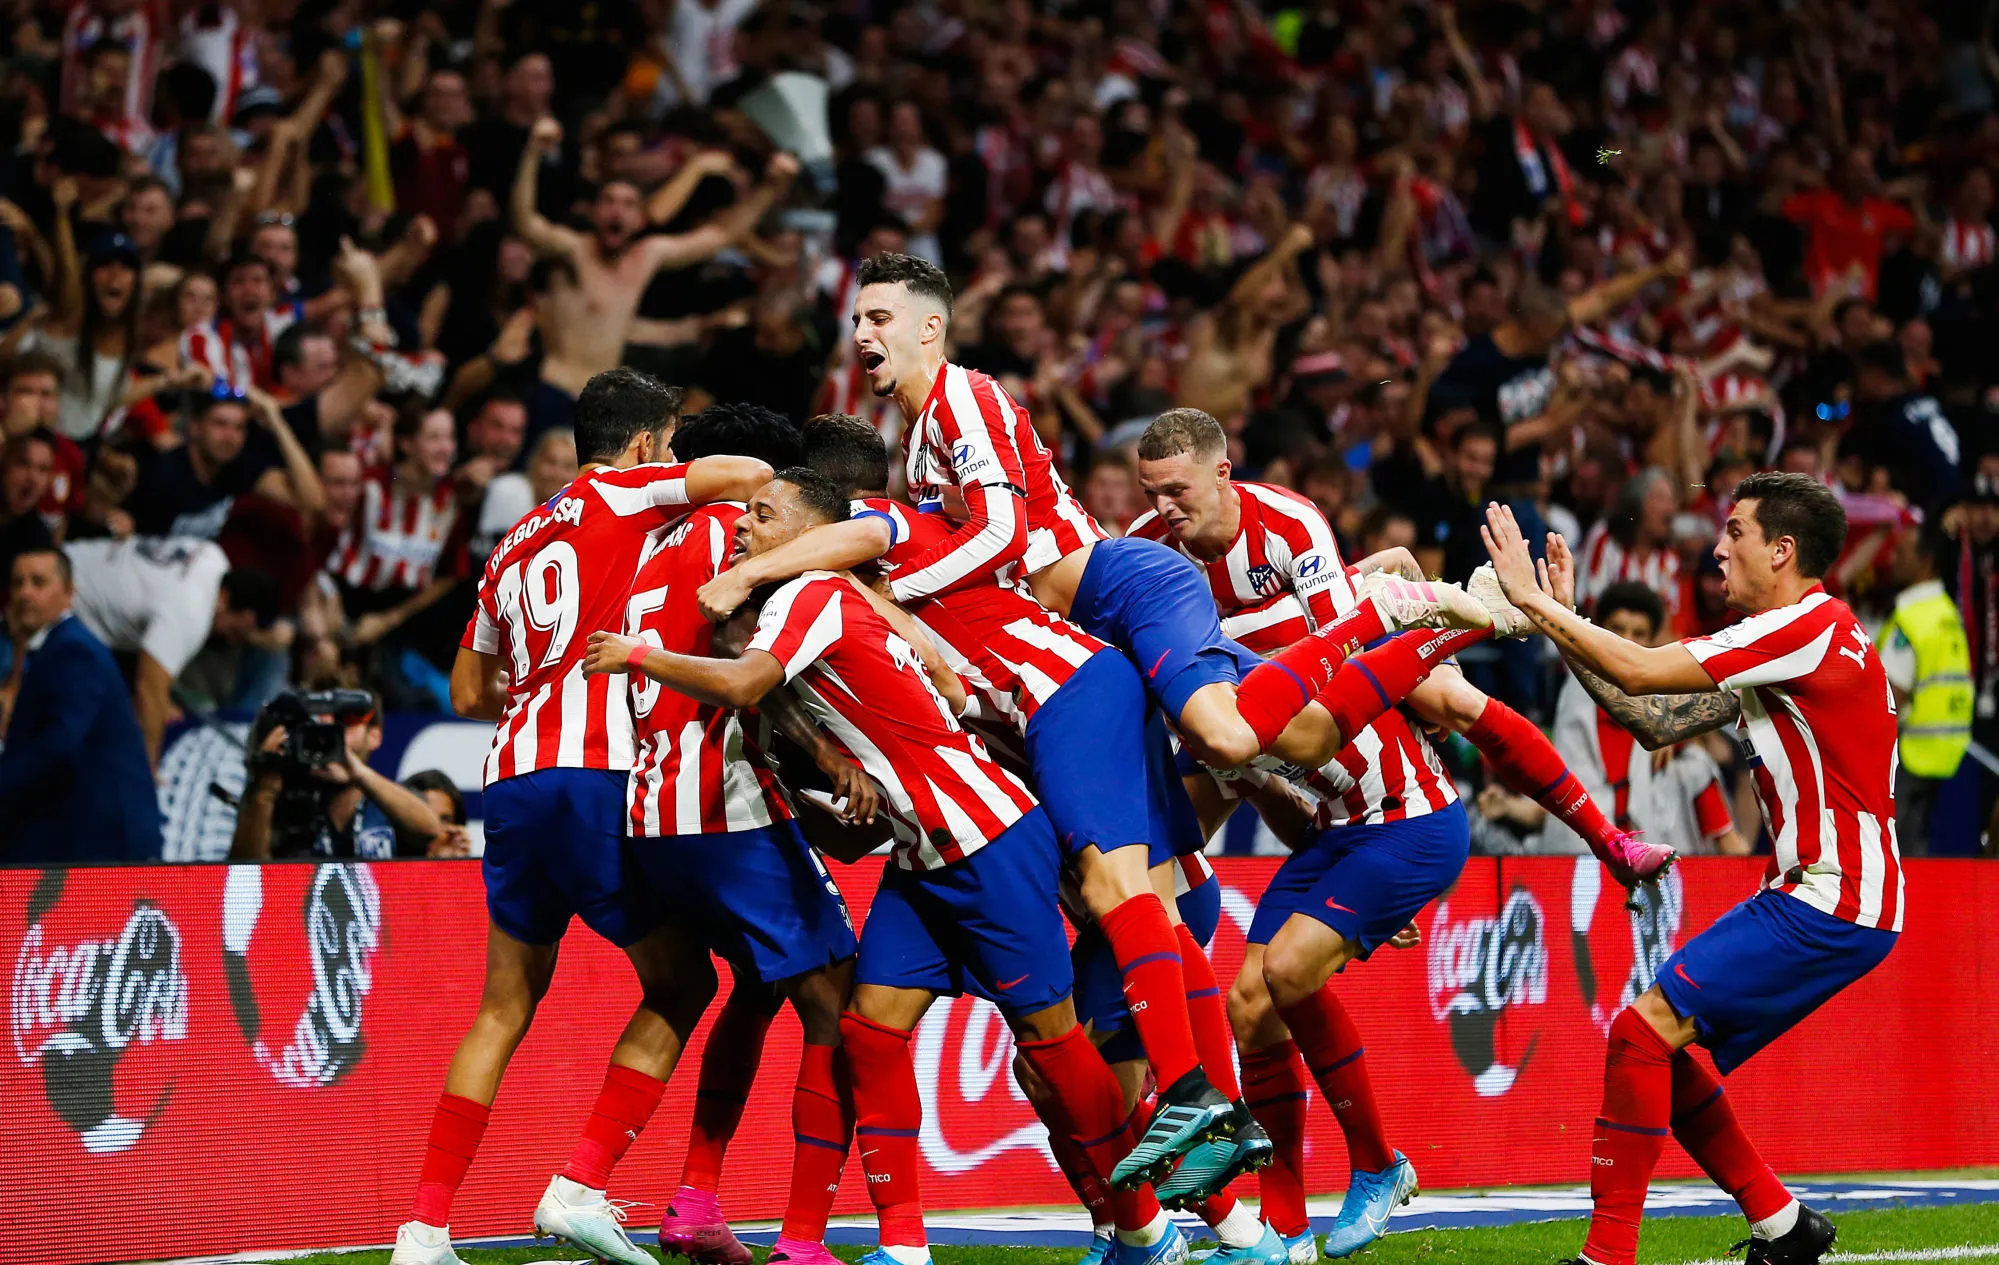 Pronostic Real Sociedad Atlético de Madrid : Analyse, prono et cotes du match de Liga